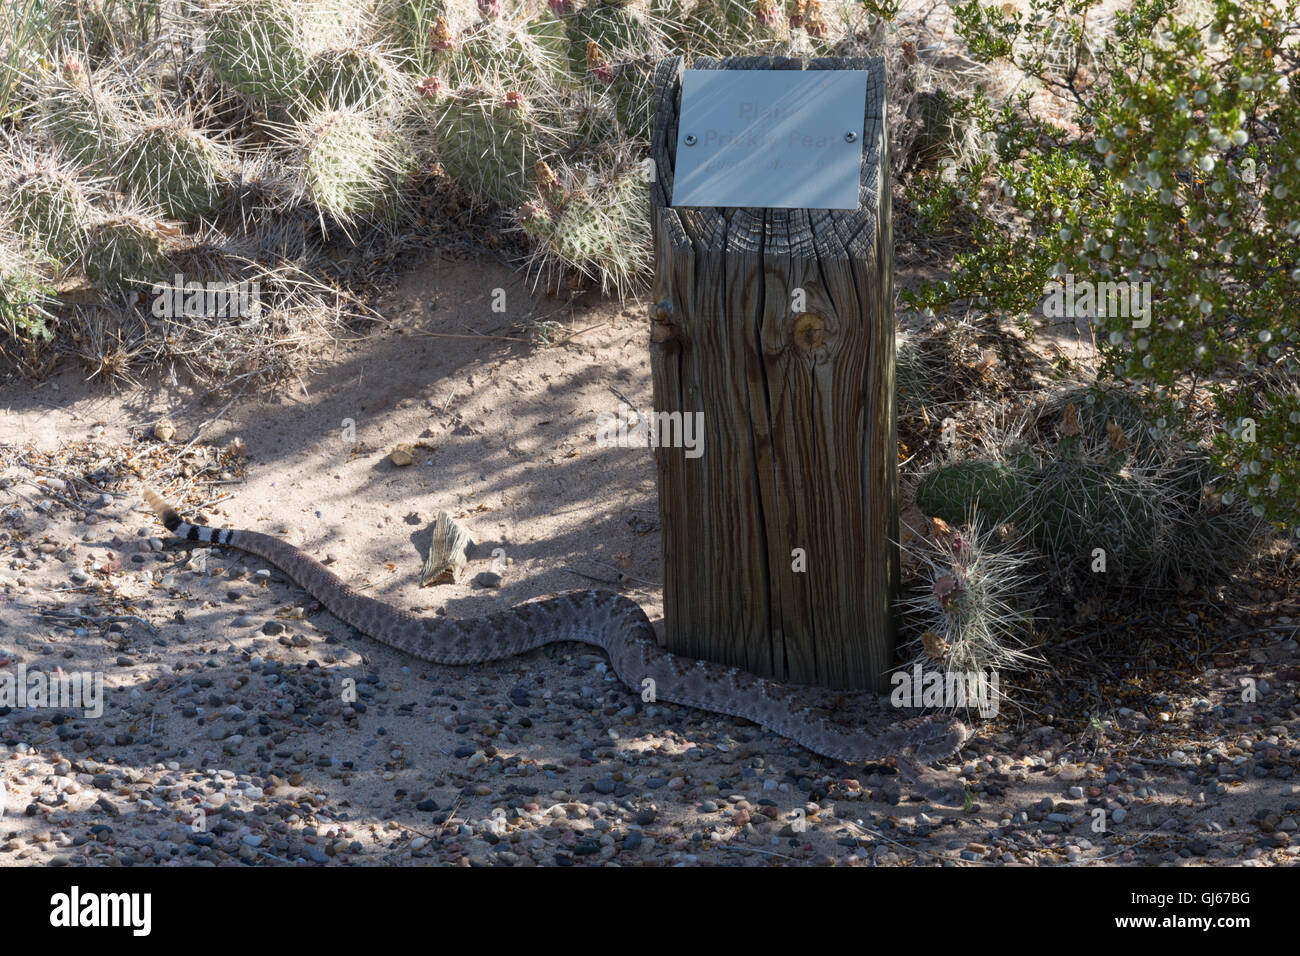 Western Diamond-backed Rattlesnake, (Crotalus atrox), Sevilleta National Wildlife Refuge, New Mexico, USA. Stock Photo